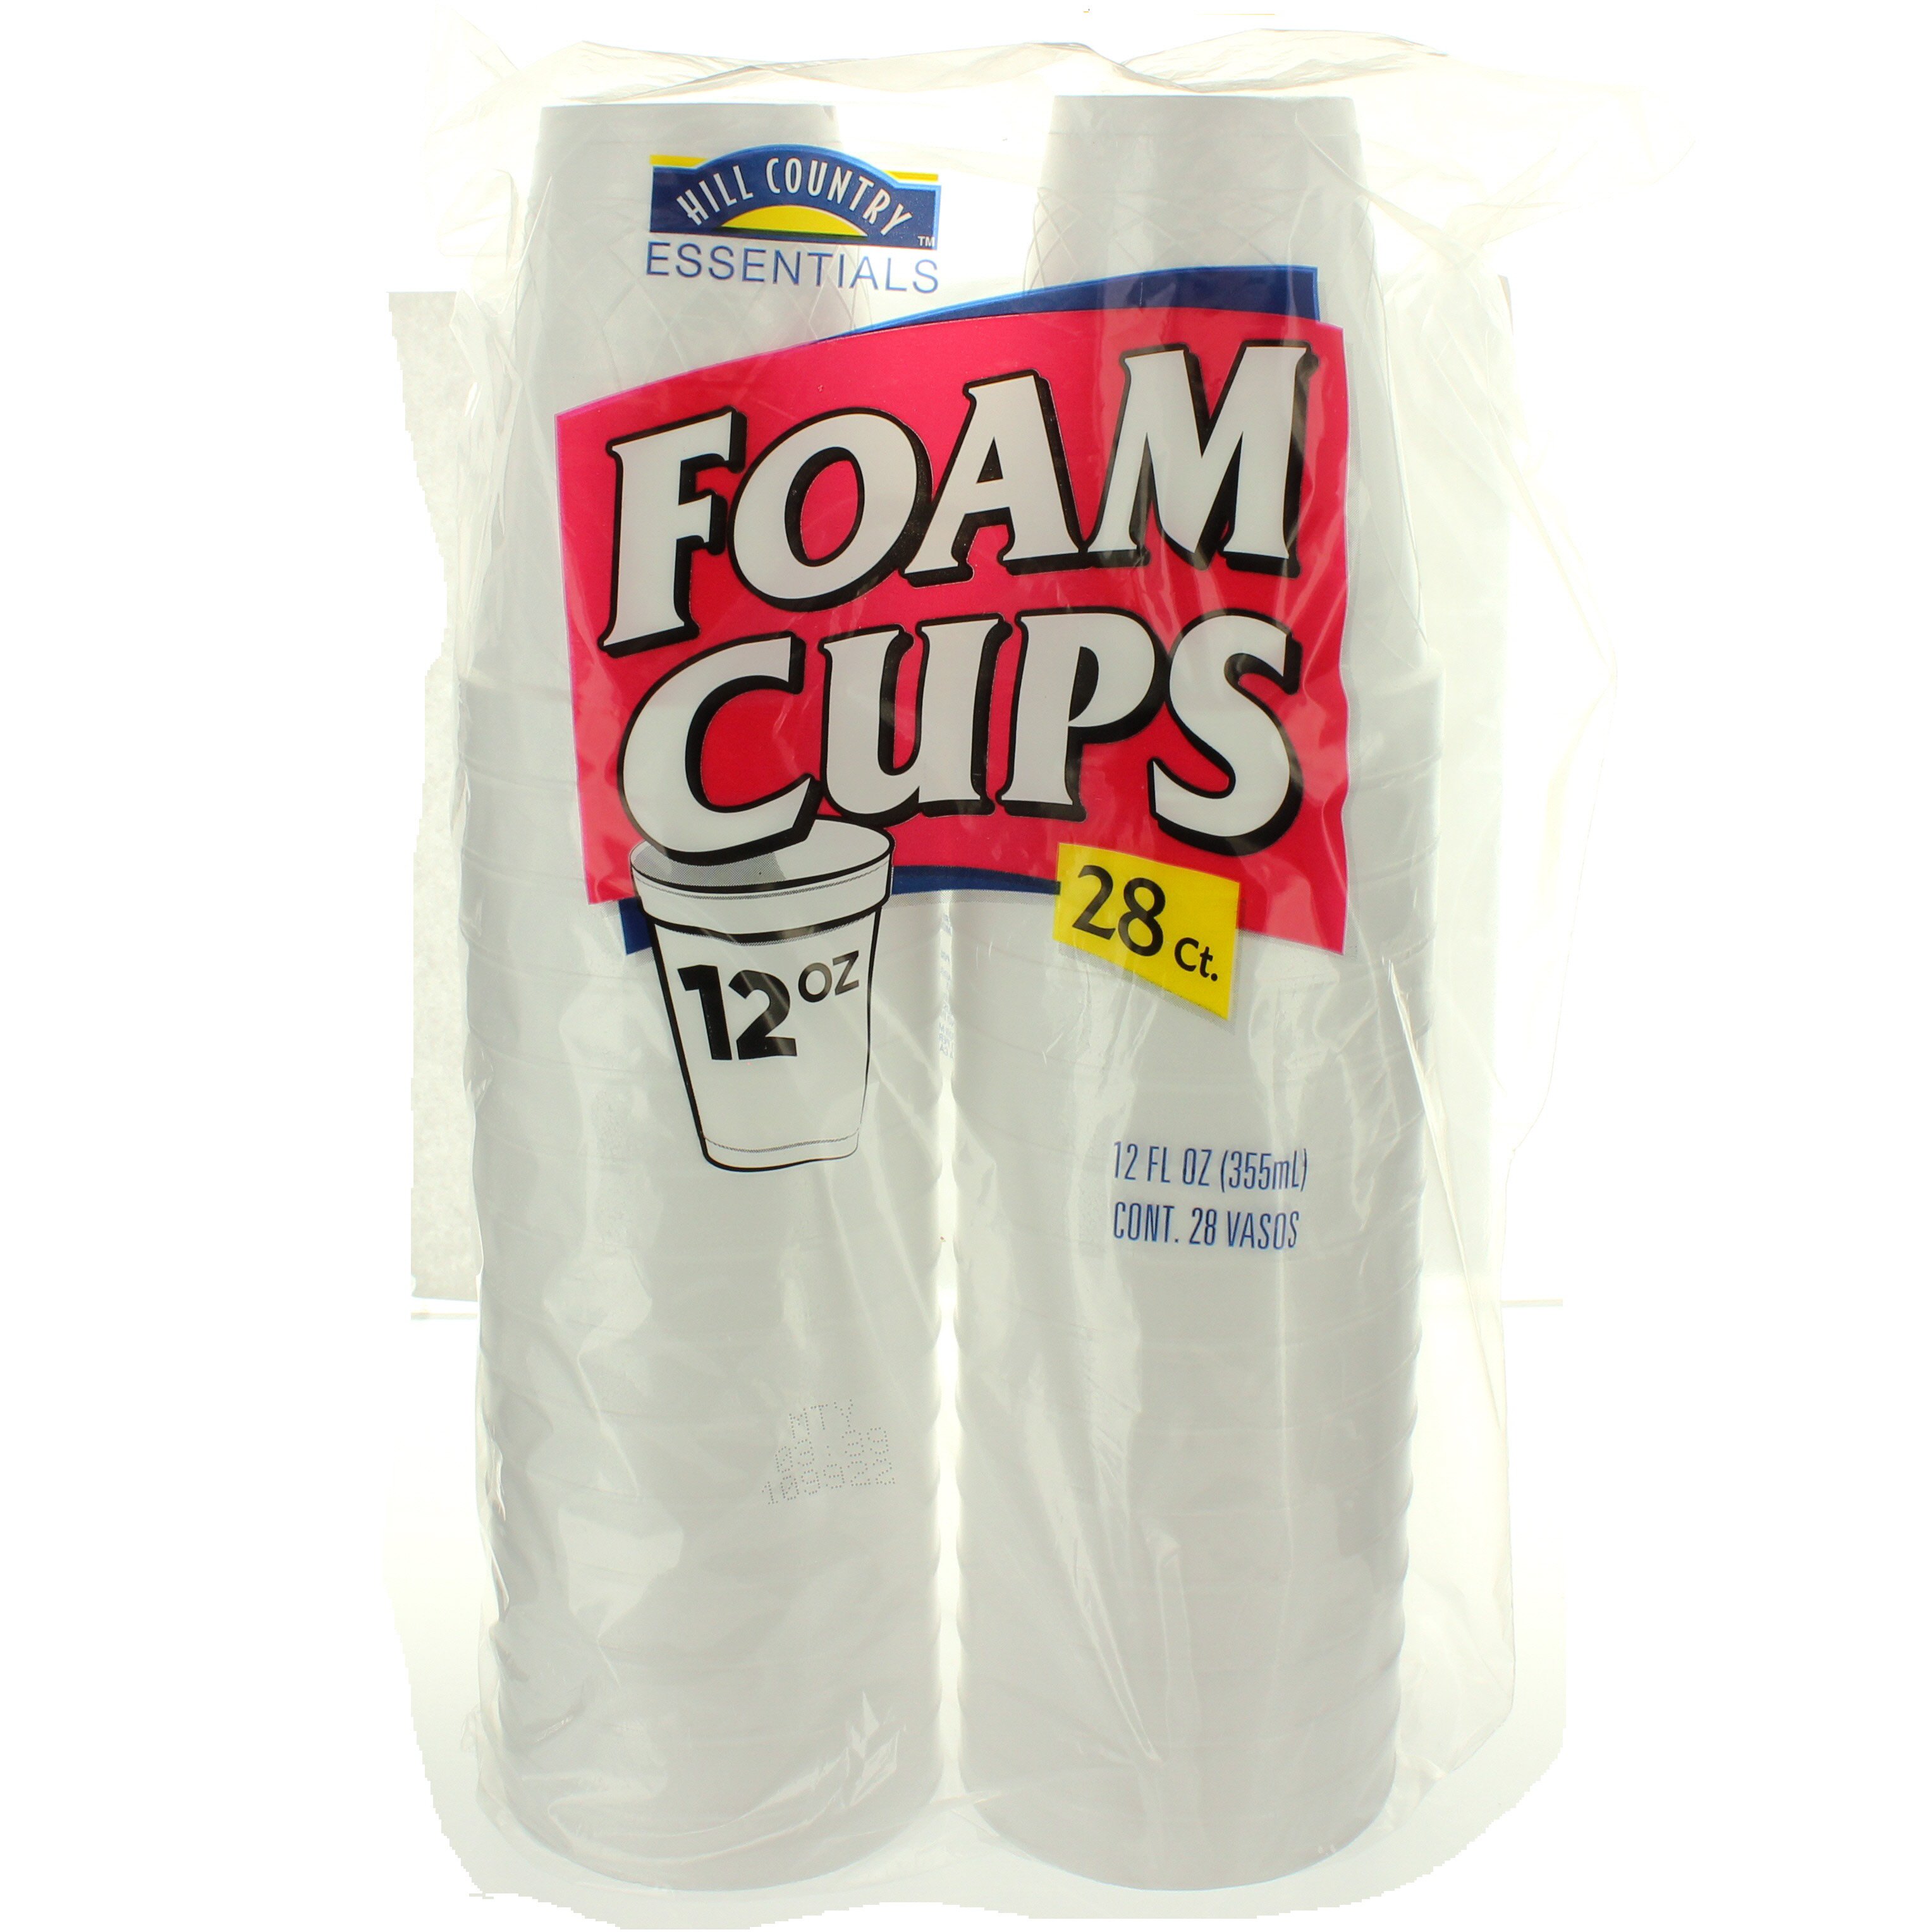 Hill Country Essentials 12 oz Foam Cups